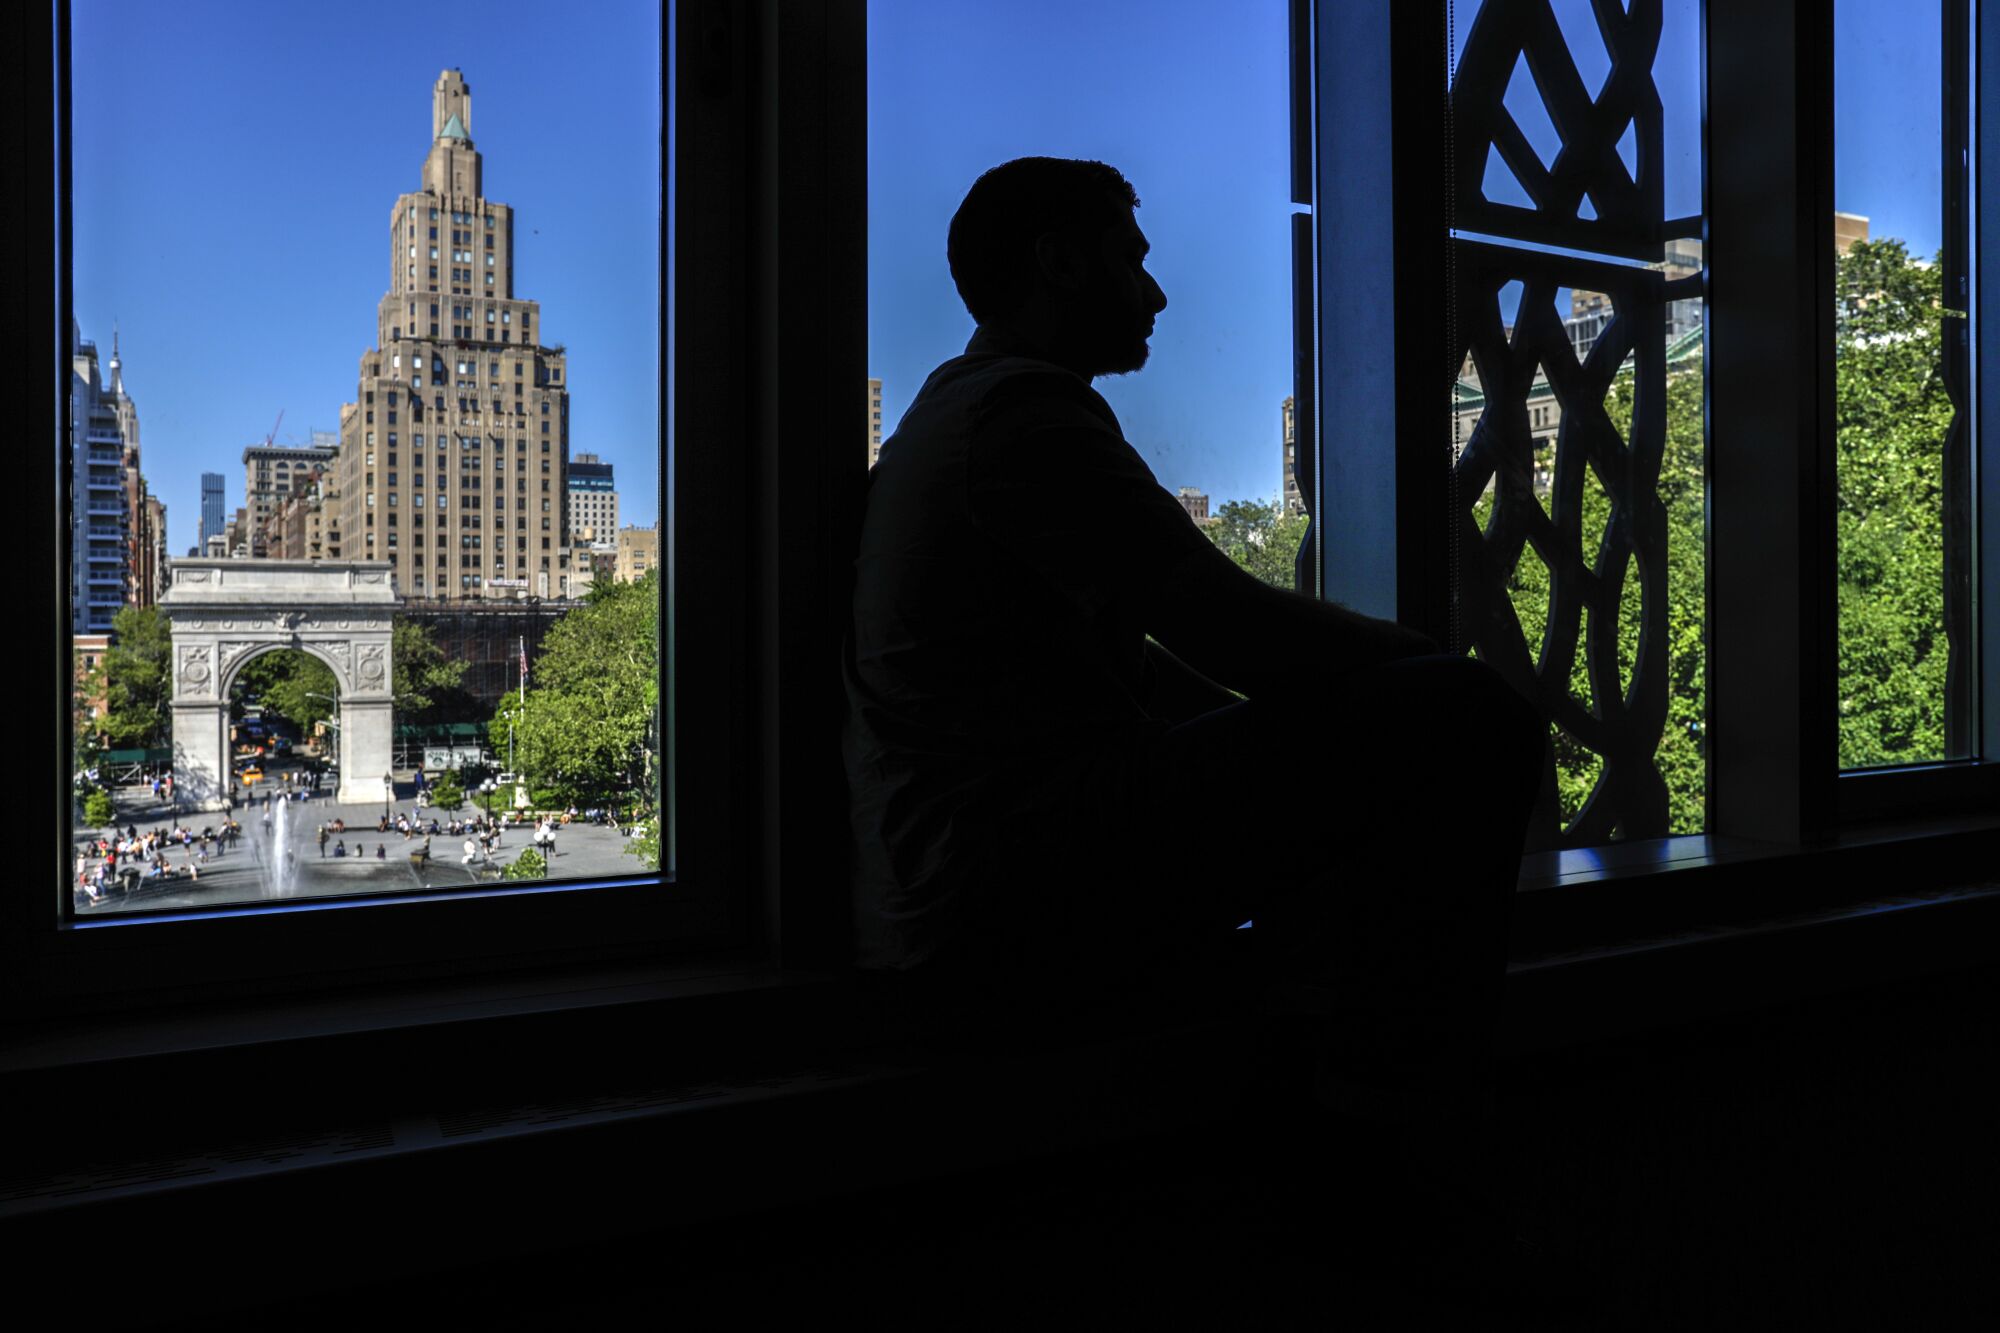 Imran Rabbani at New York University's Islamic Center. He's in his third semester at the university.